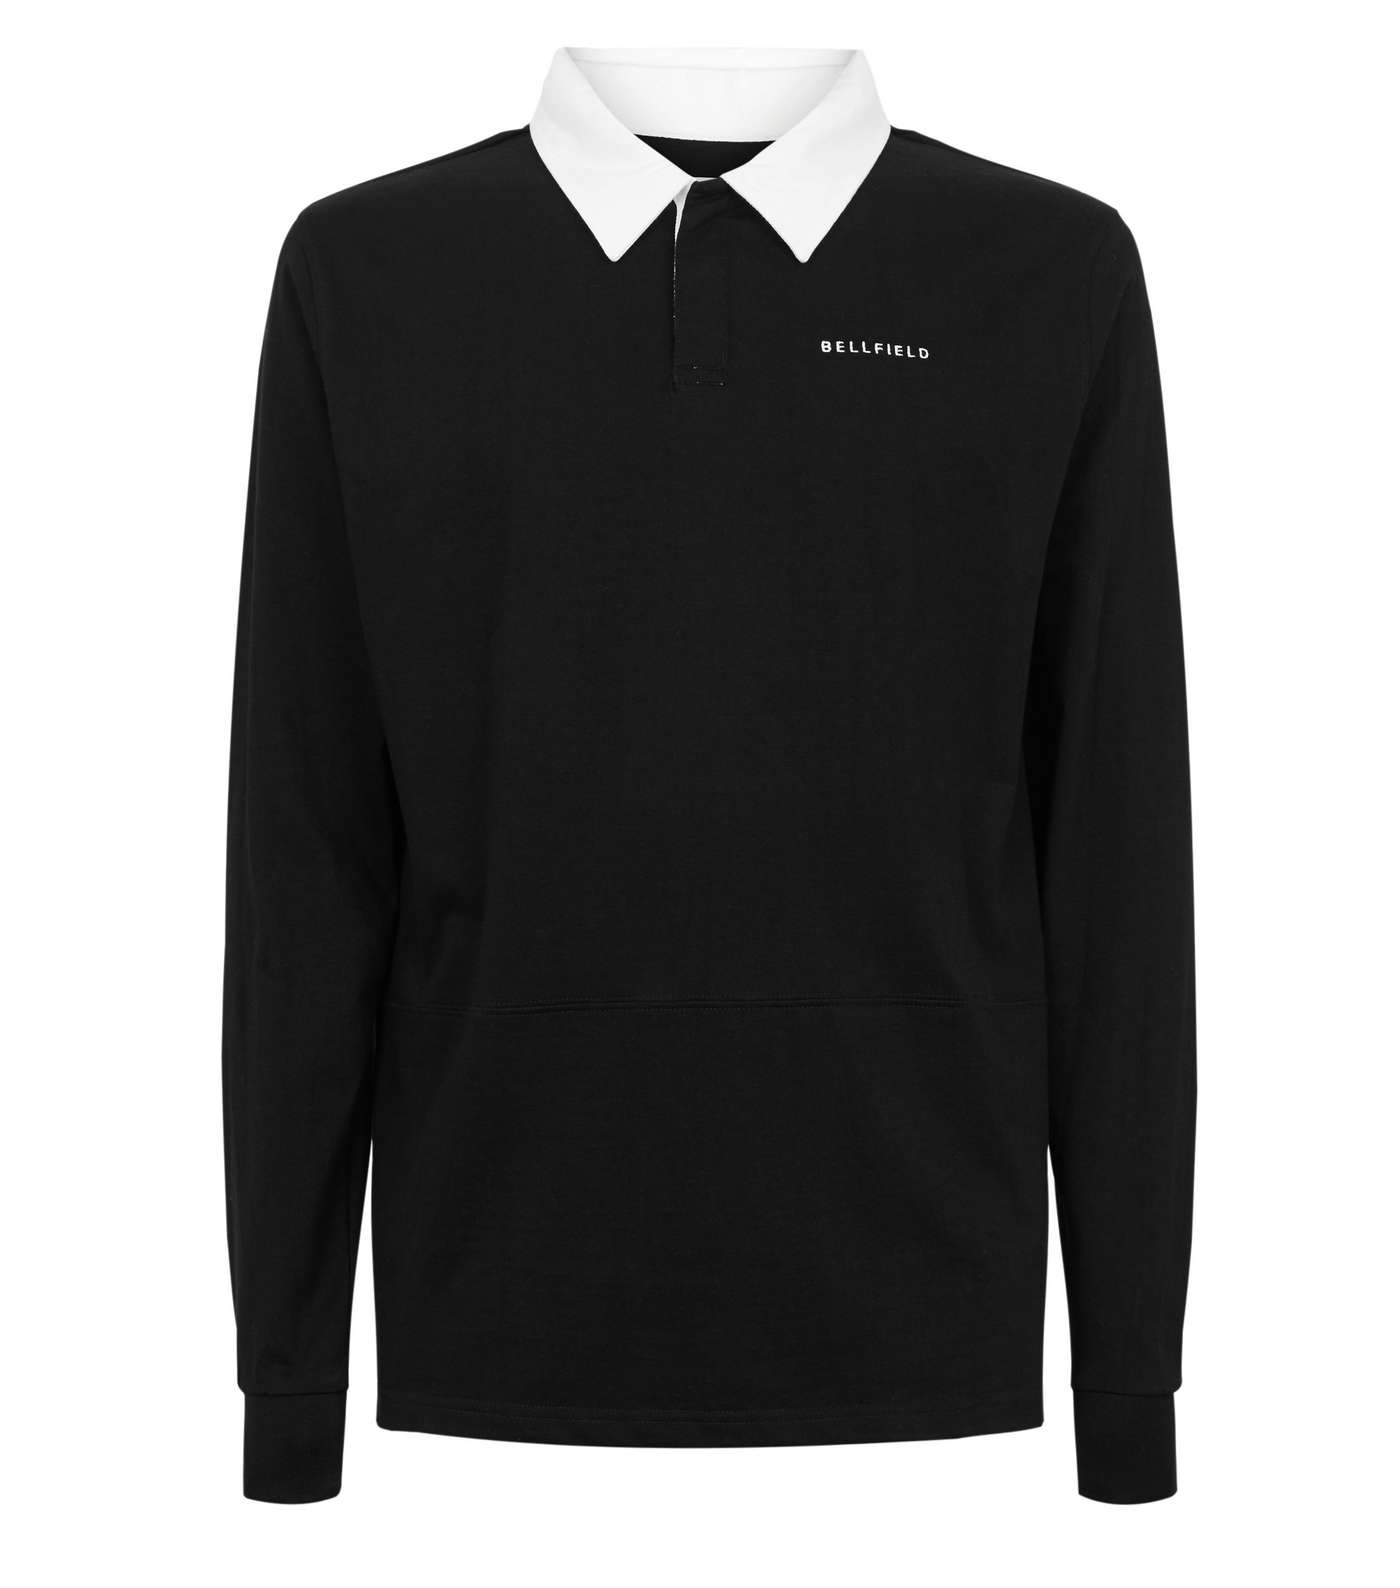 Bellfield Black Contrast Collar Rugby Shirt Image 4